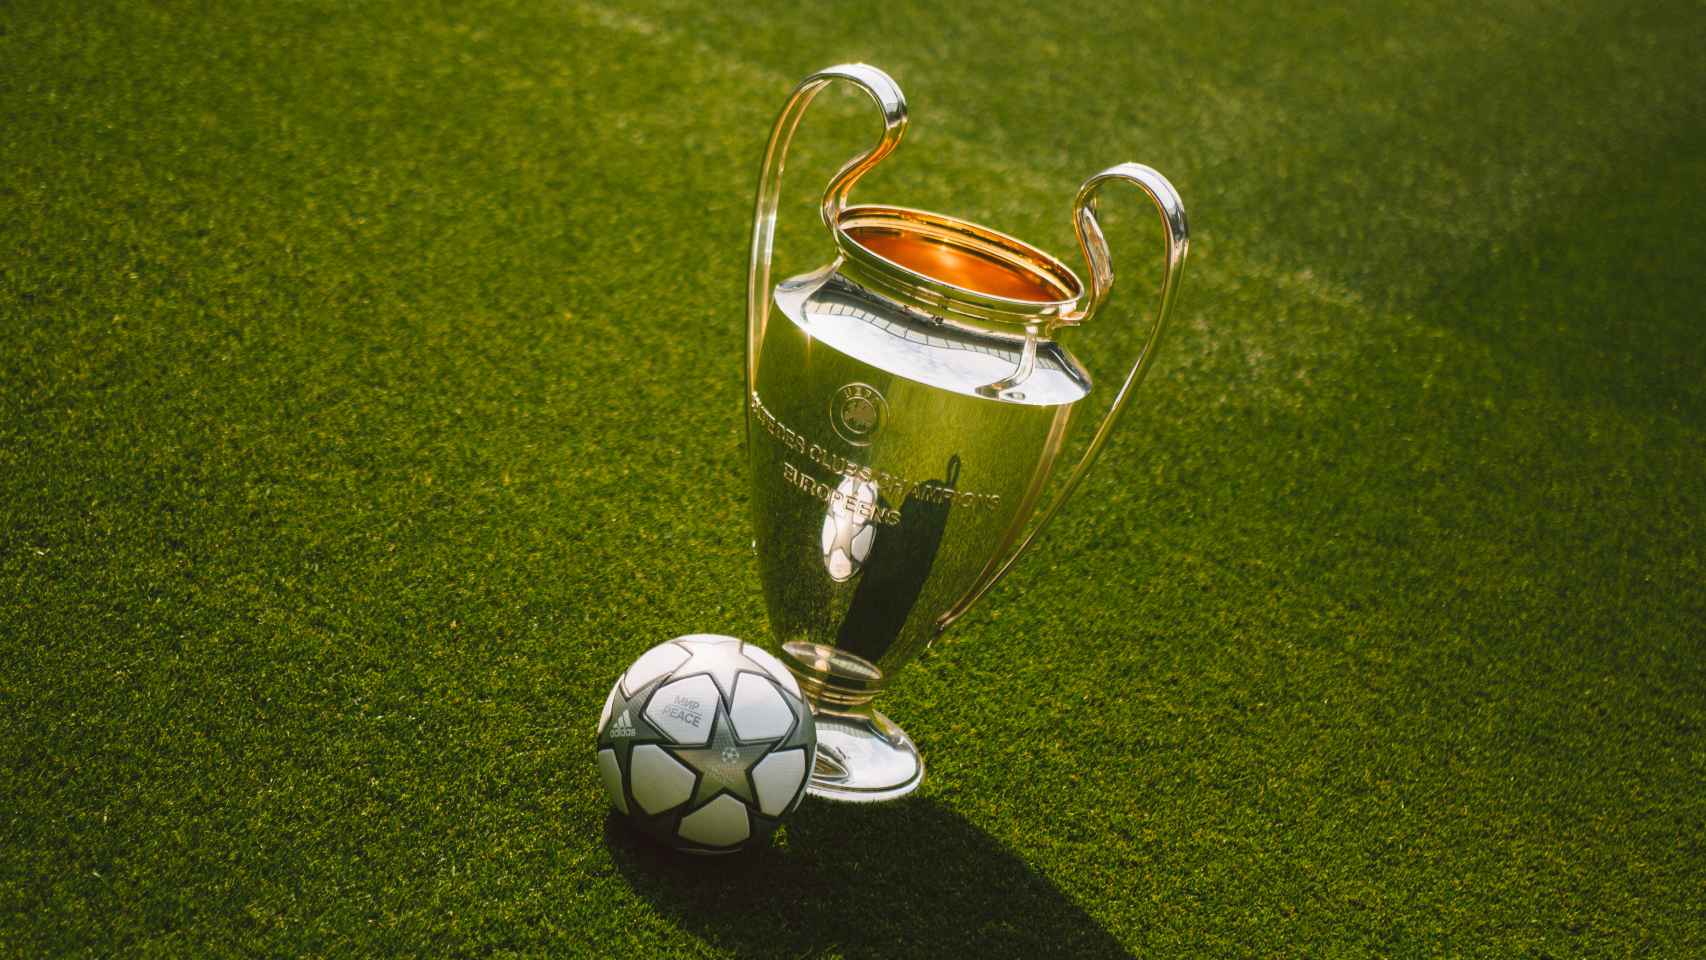 Balón de la final de la Champions League 2022, Adidas